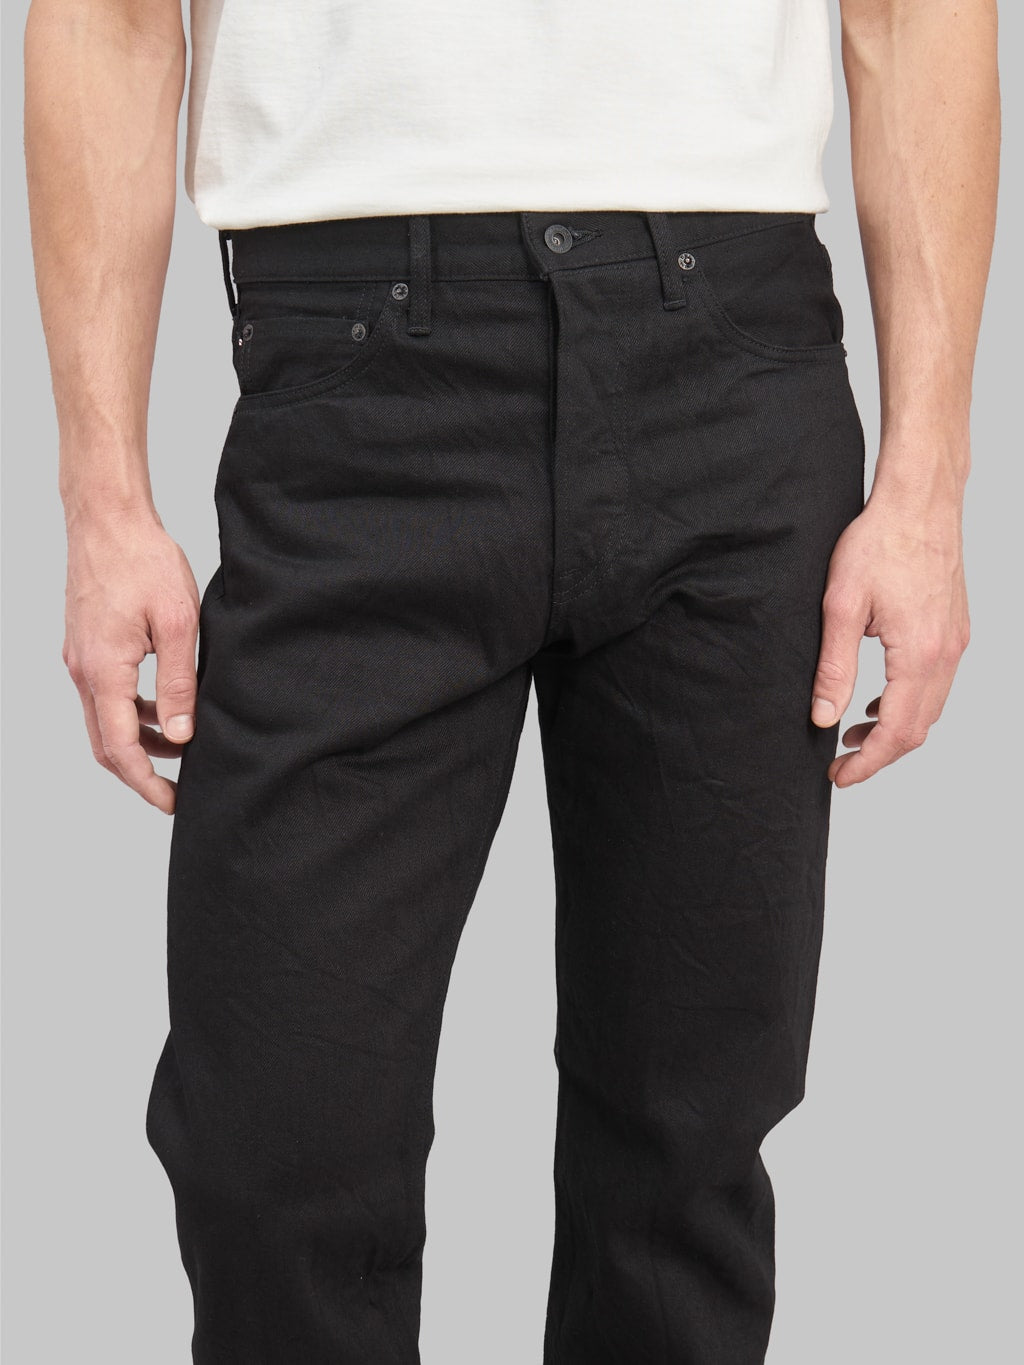 ONI Denim 286-13BK "Jet Black Denim" 13oz Neat Straight Jeans